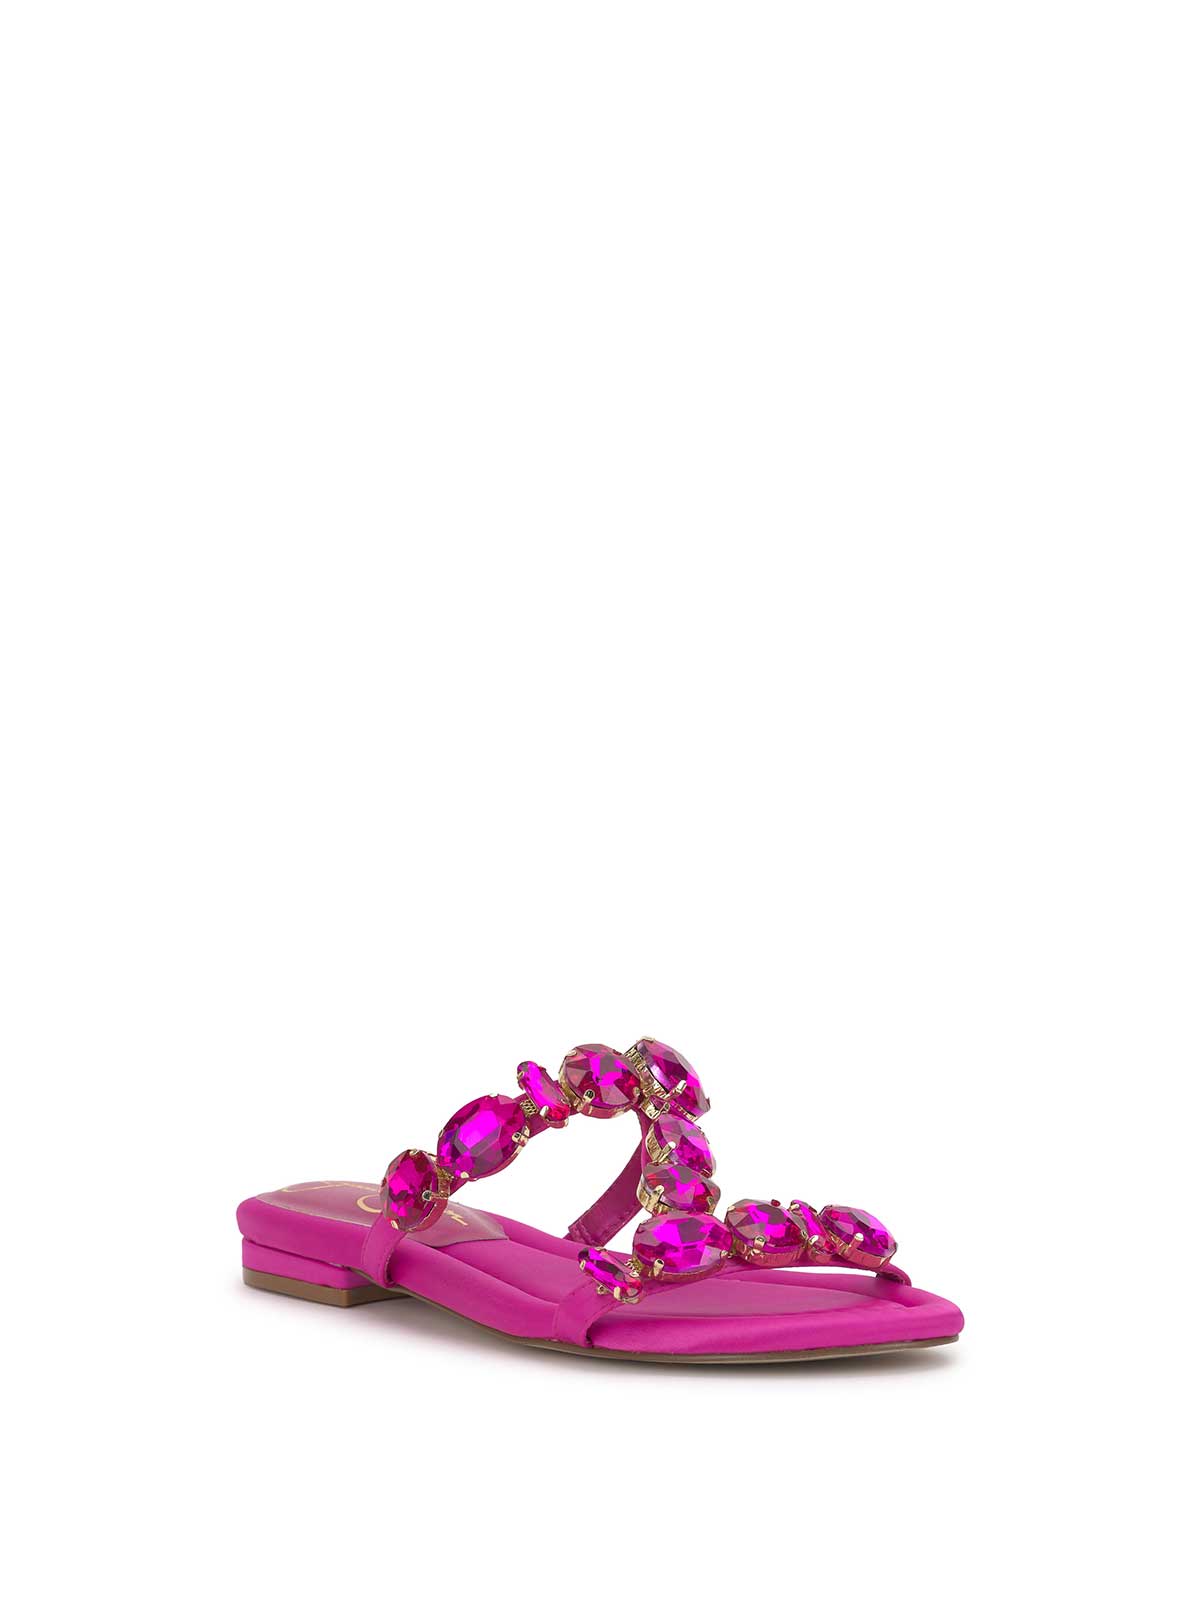 Avimma Flat Sandal in Brightest Pink – Jessica Simpson